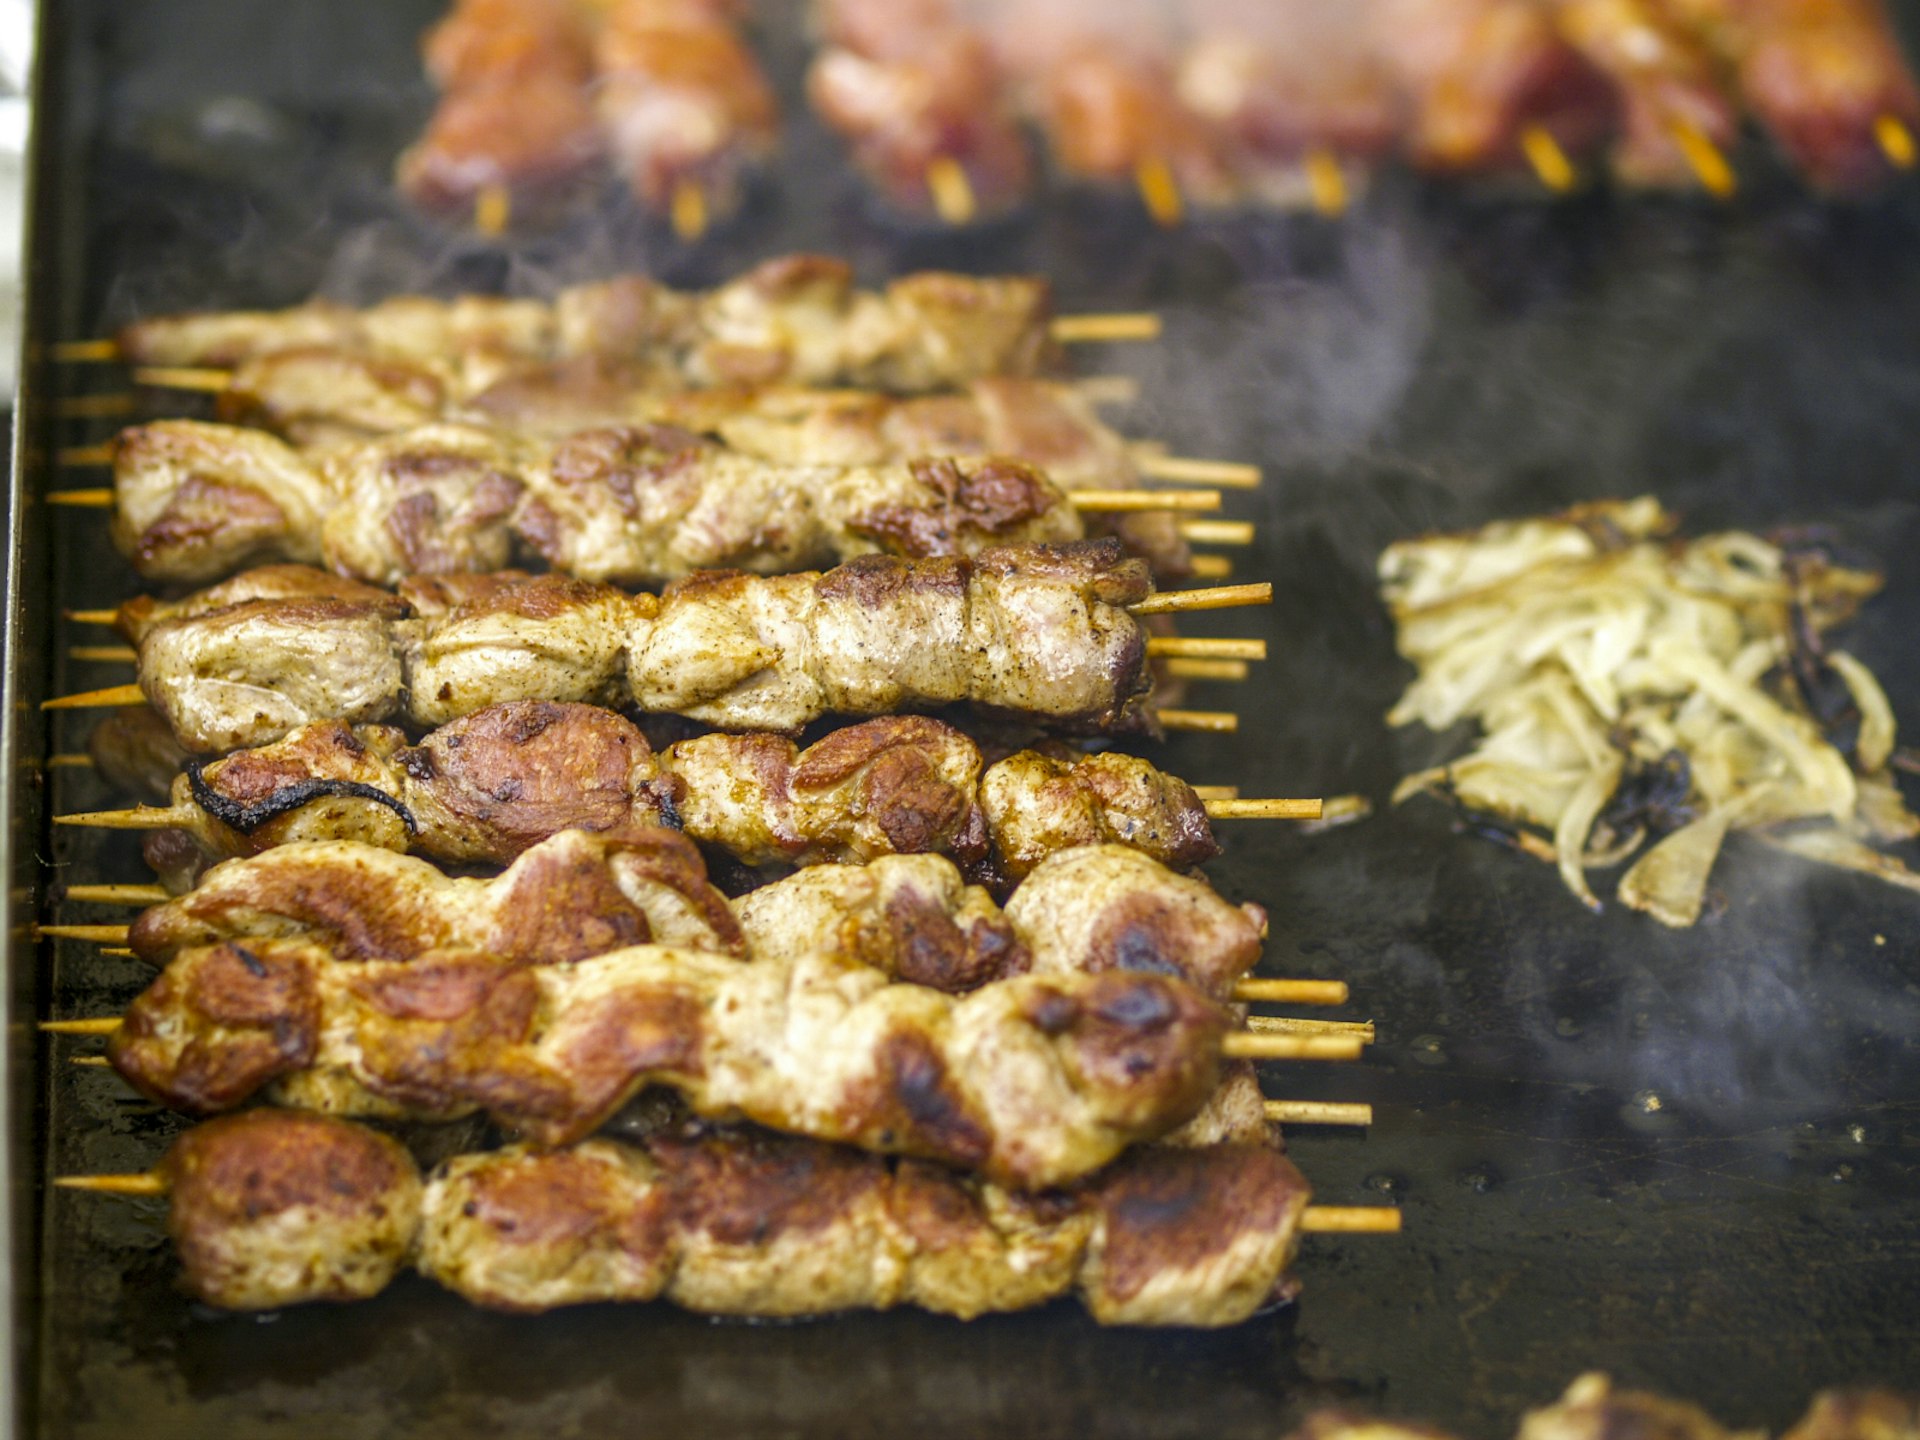 Kebabs sizzle on a griddle at Vienna's Naschmarkt